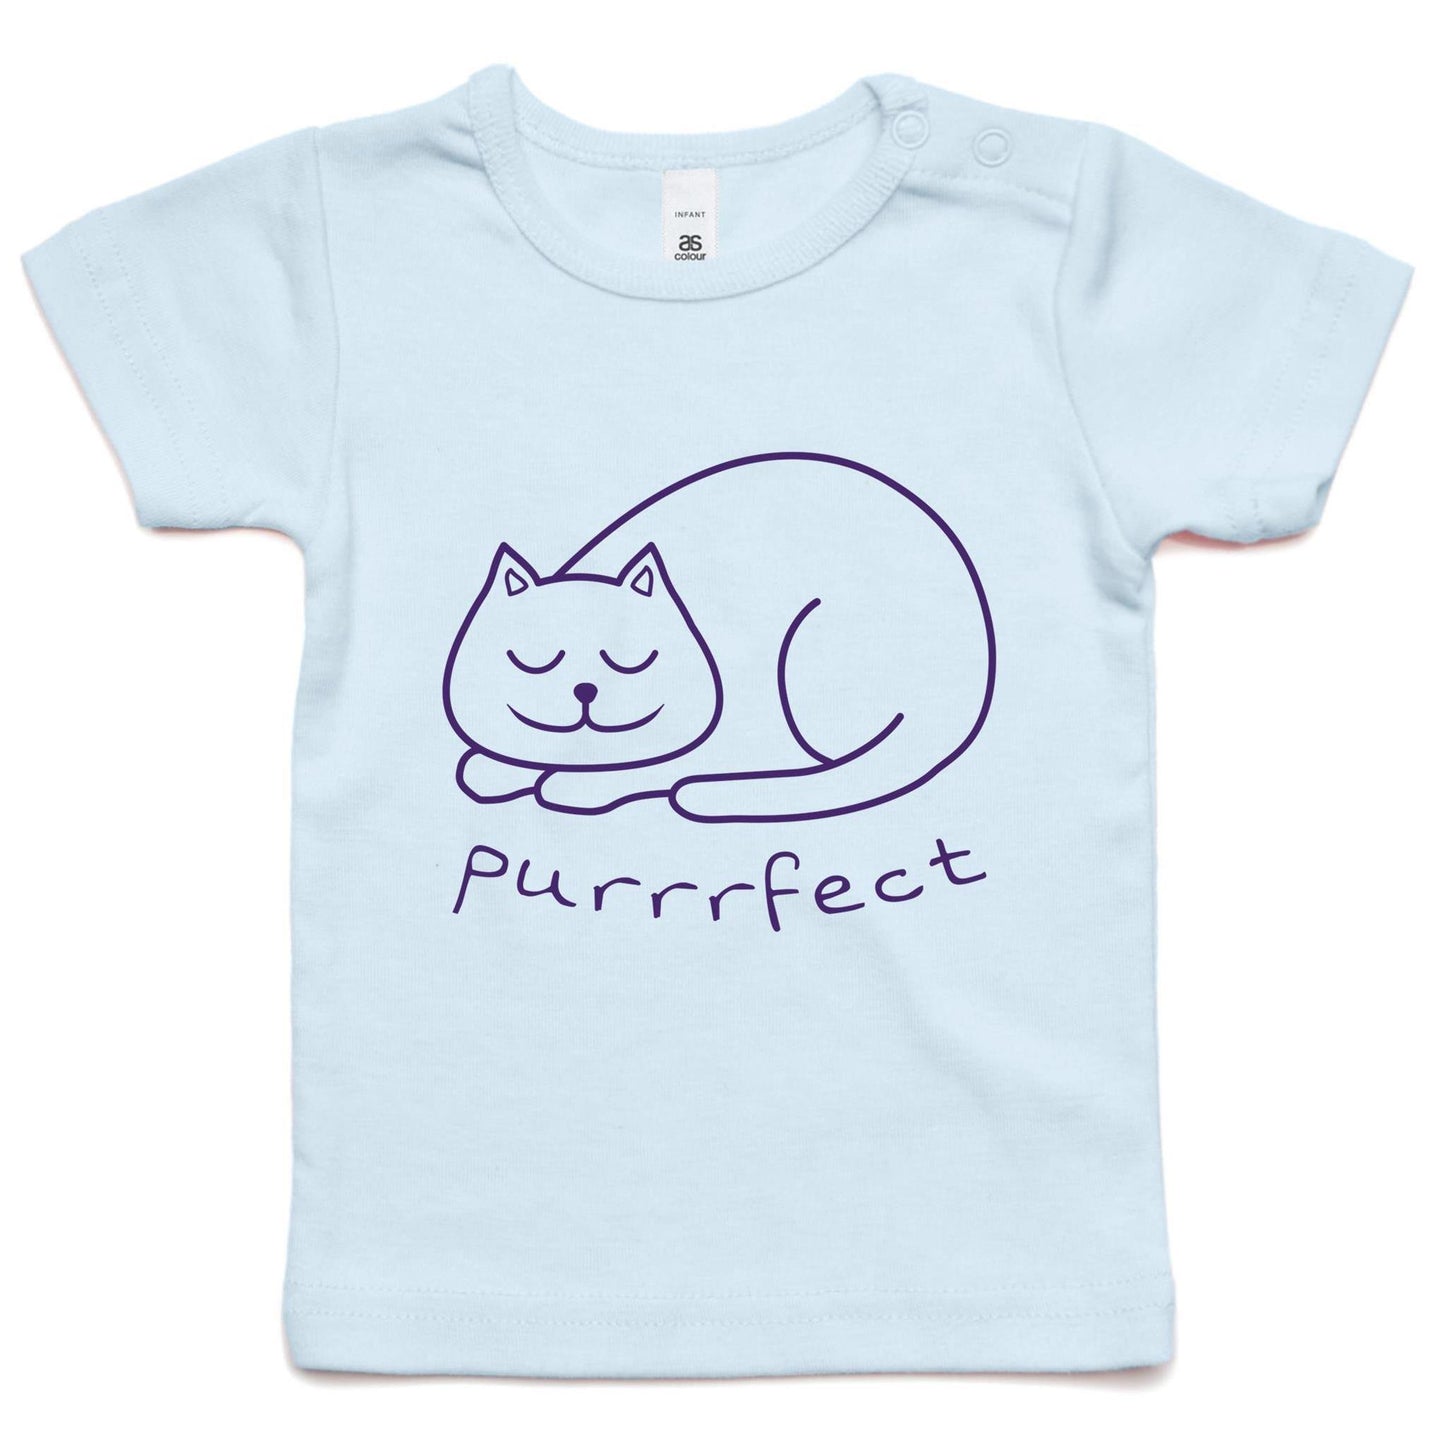 Purrrfect - Baby T-shirt Powder Blue Baby T-shirt animal kids